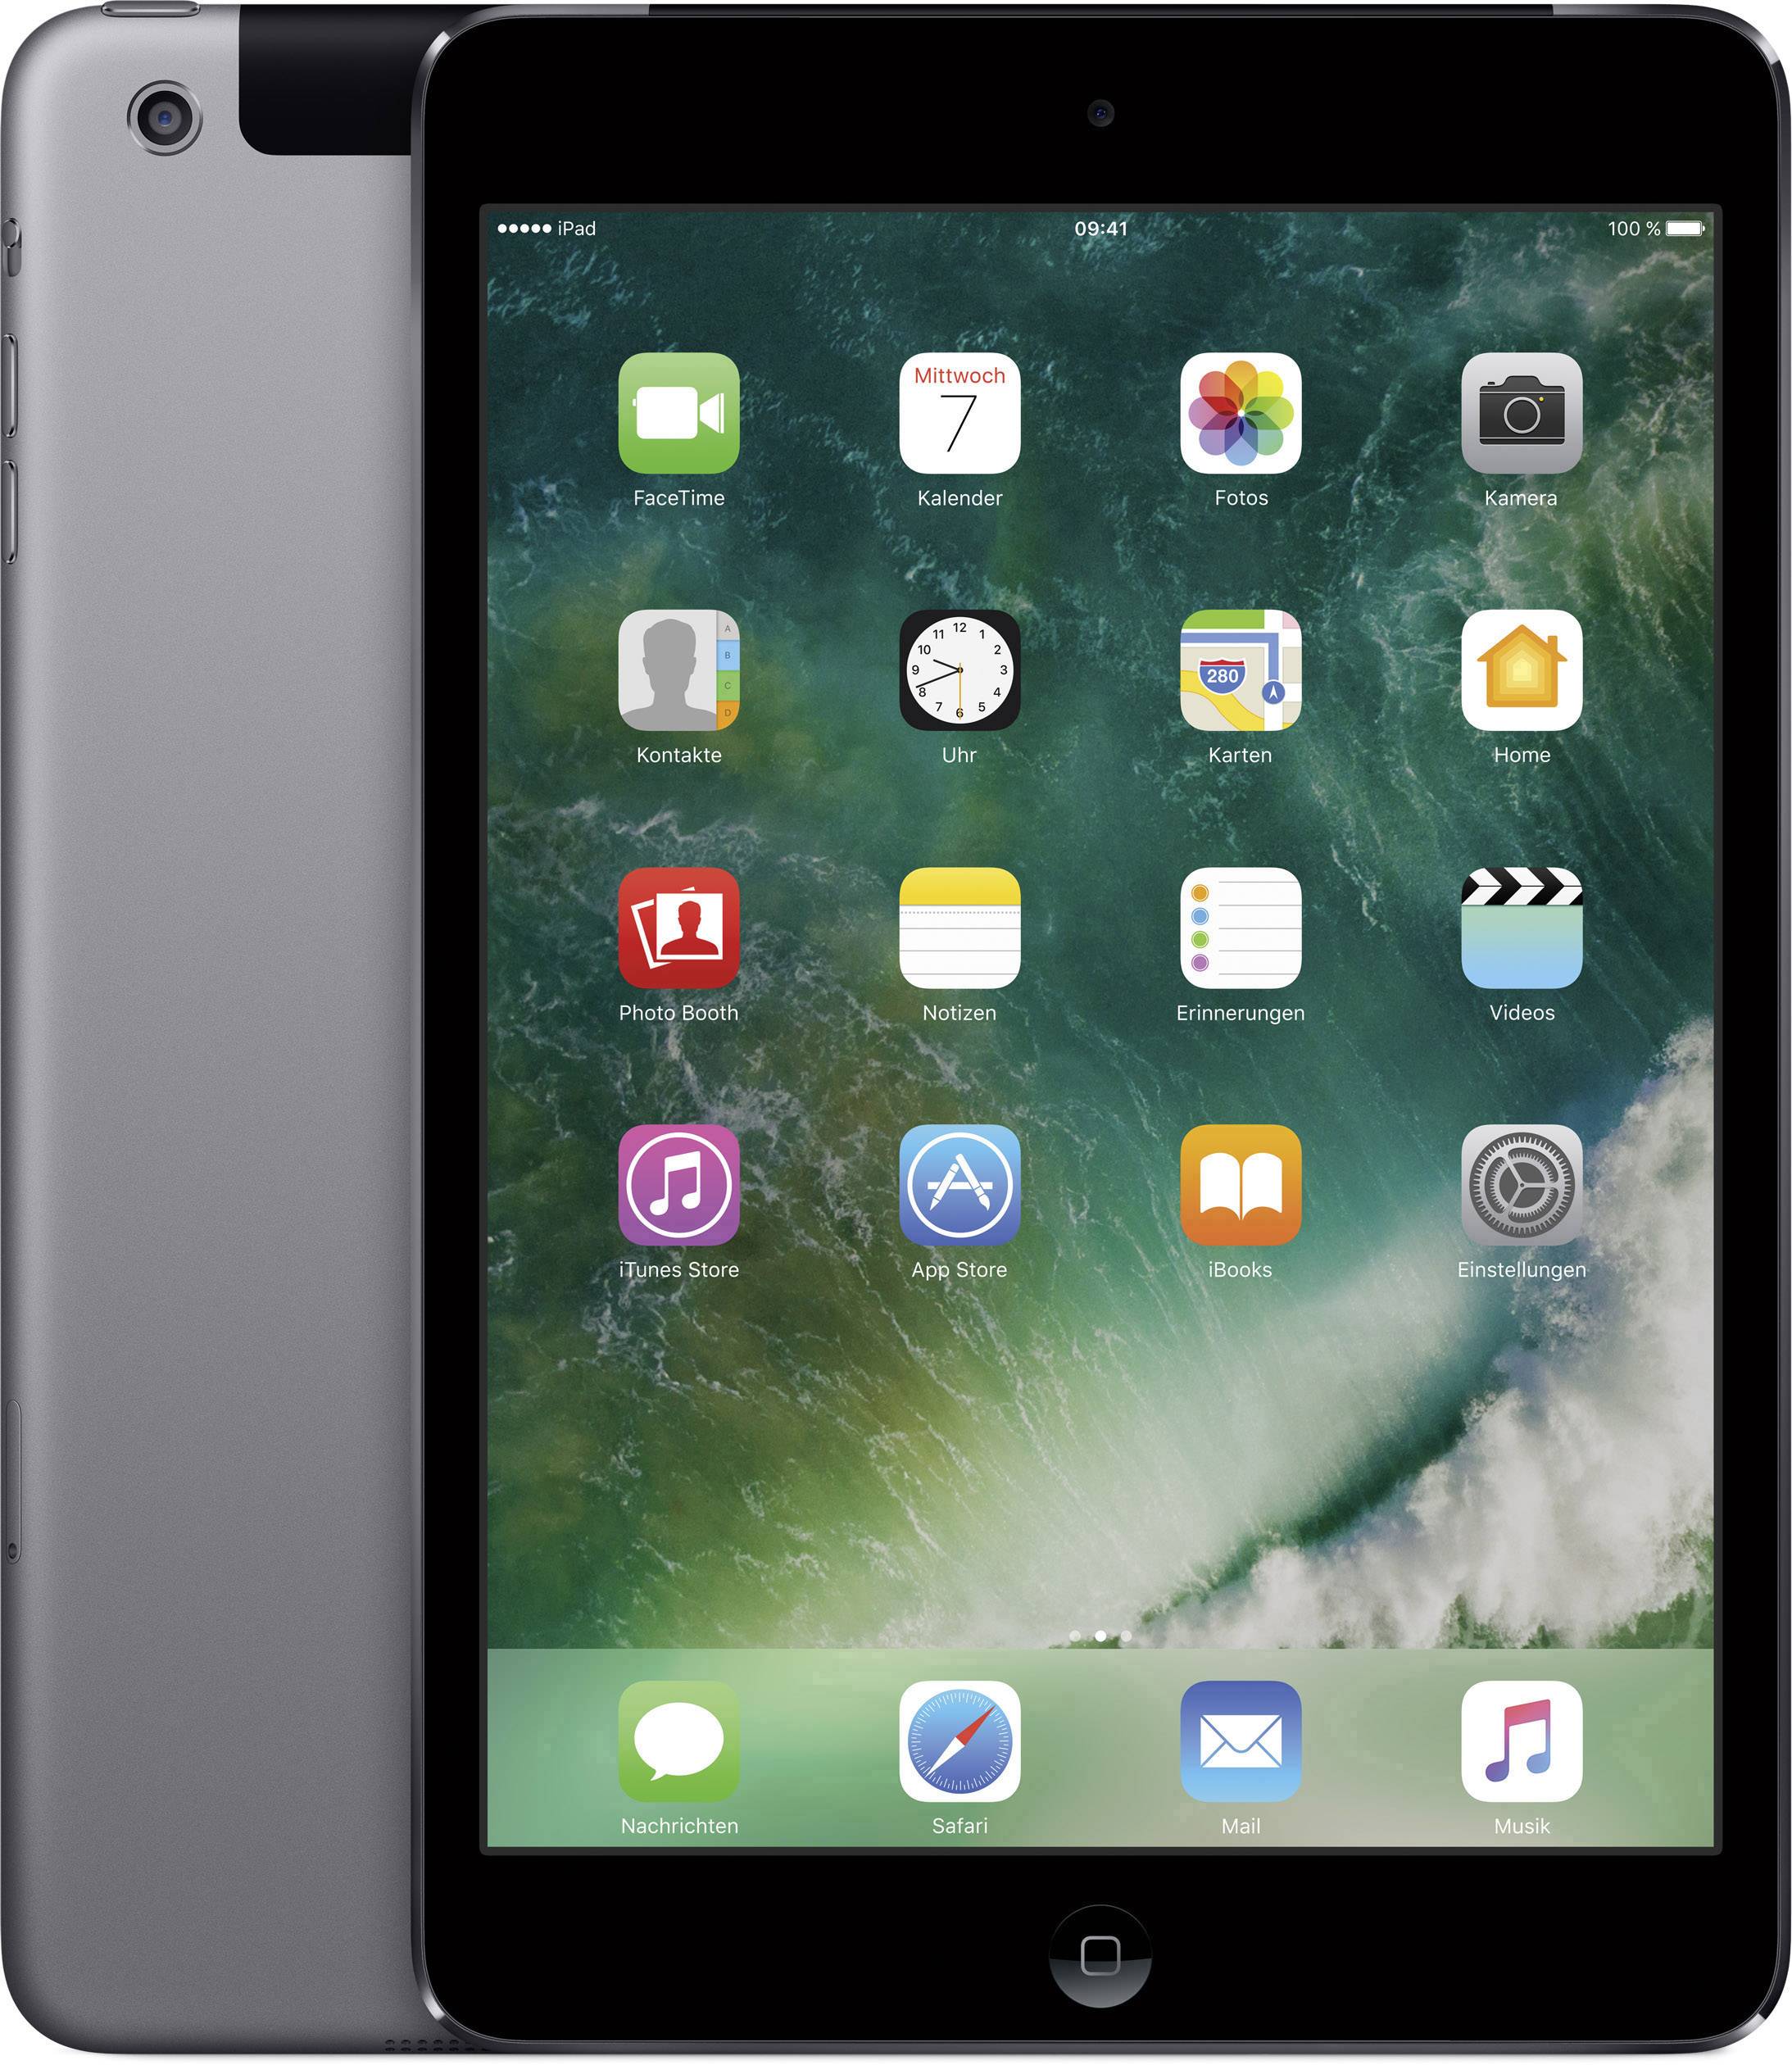 Apple iPad mini 7.9 (2nd Gen) UMTS/3G, 32 GB Spaceship grey iPad 20.1 cm inch) iOS 10 2048 x 1536 | Conrad.com